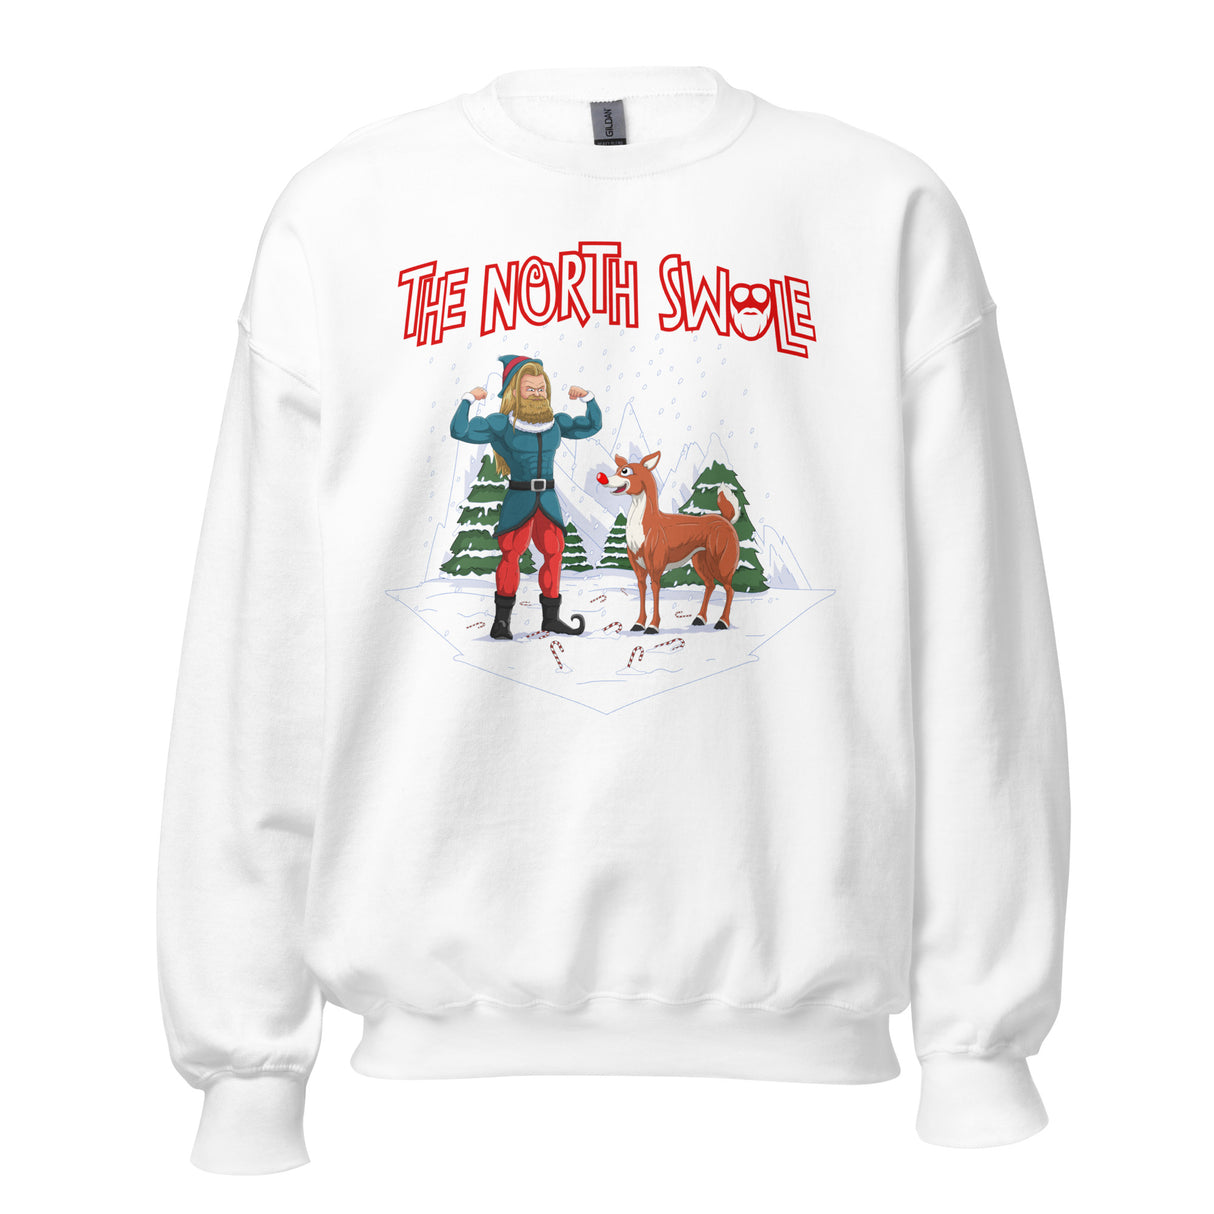 The North Swole Sweatshirt